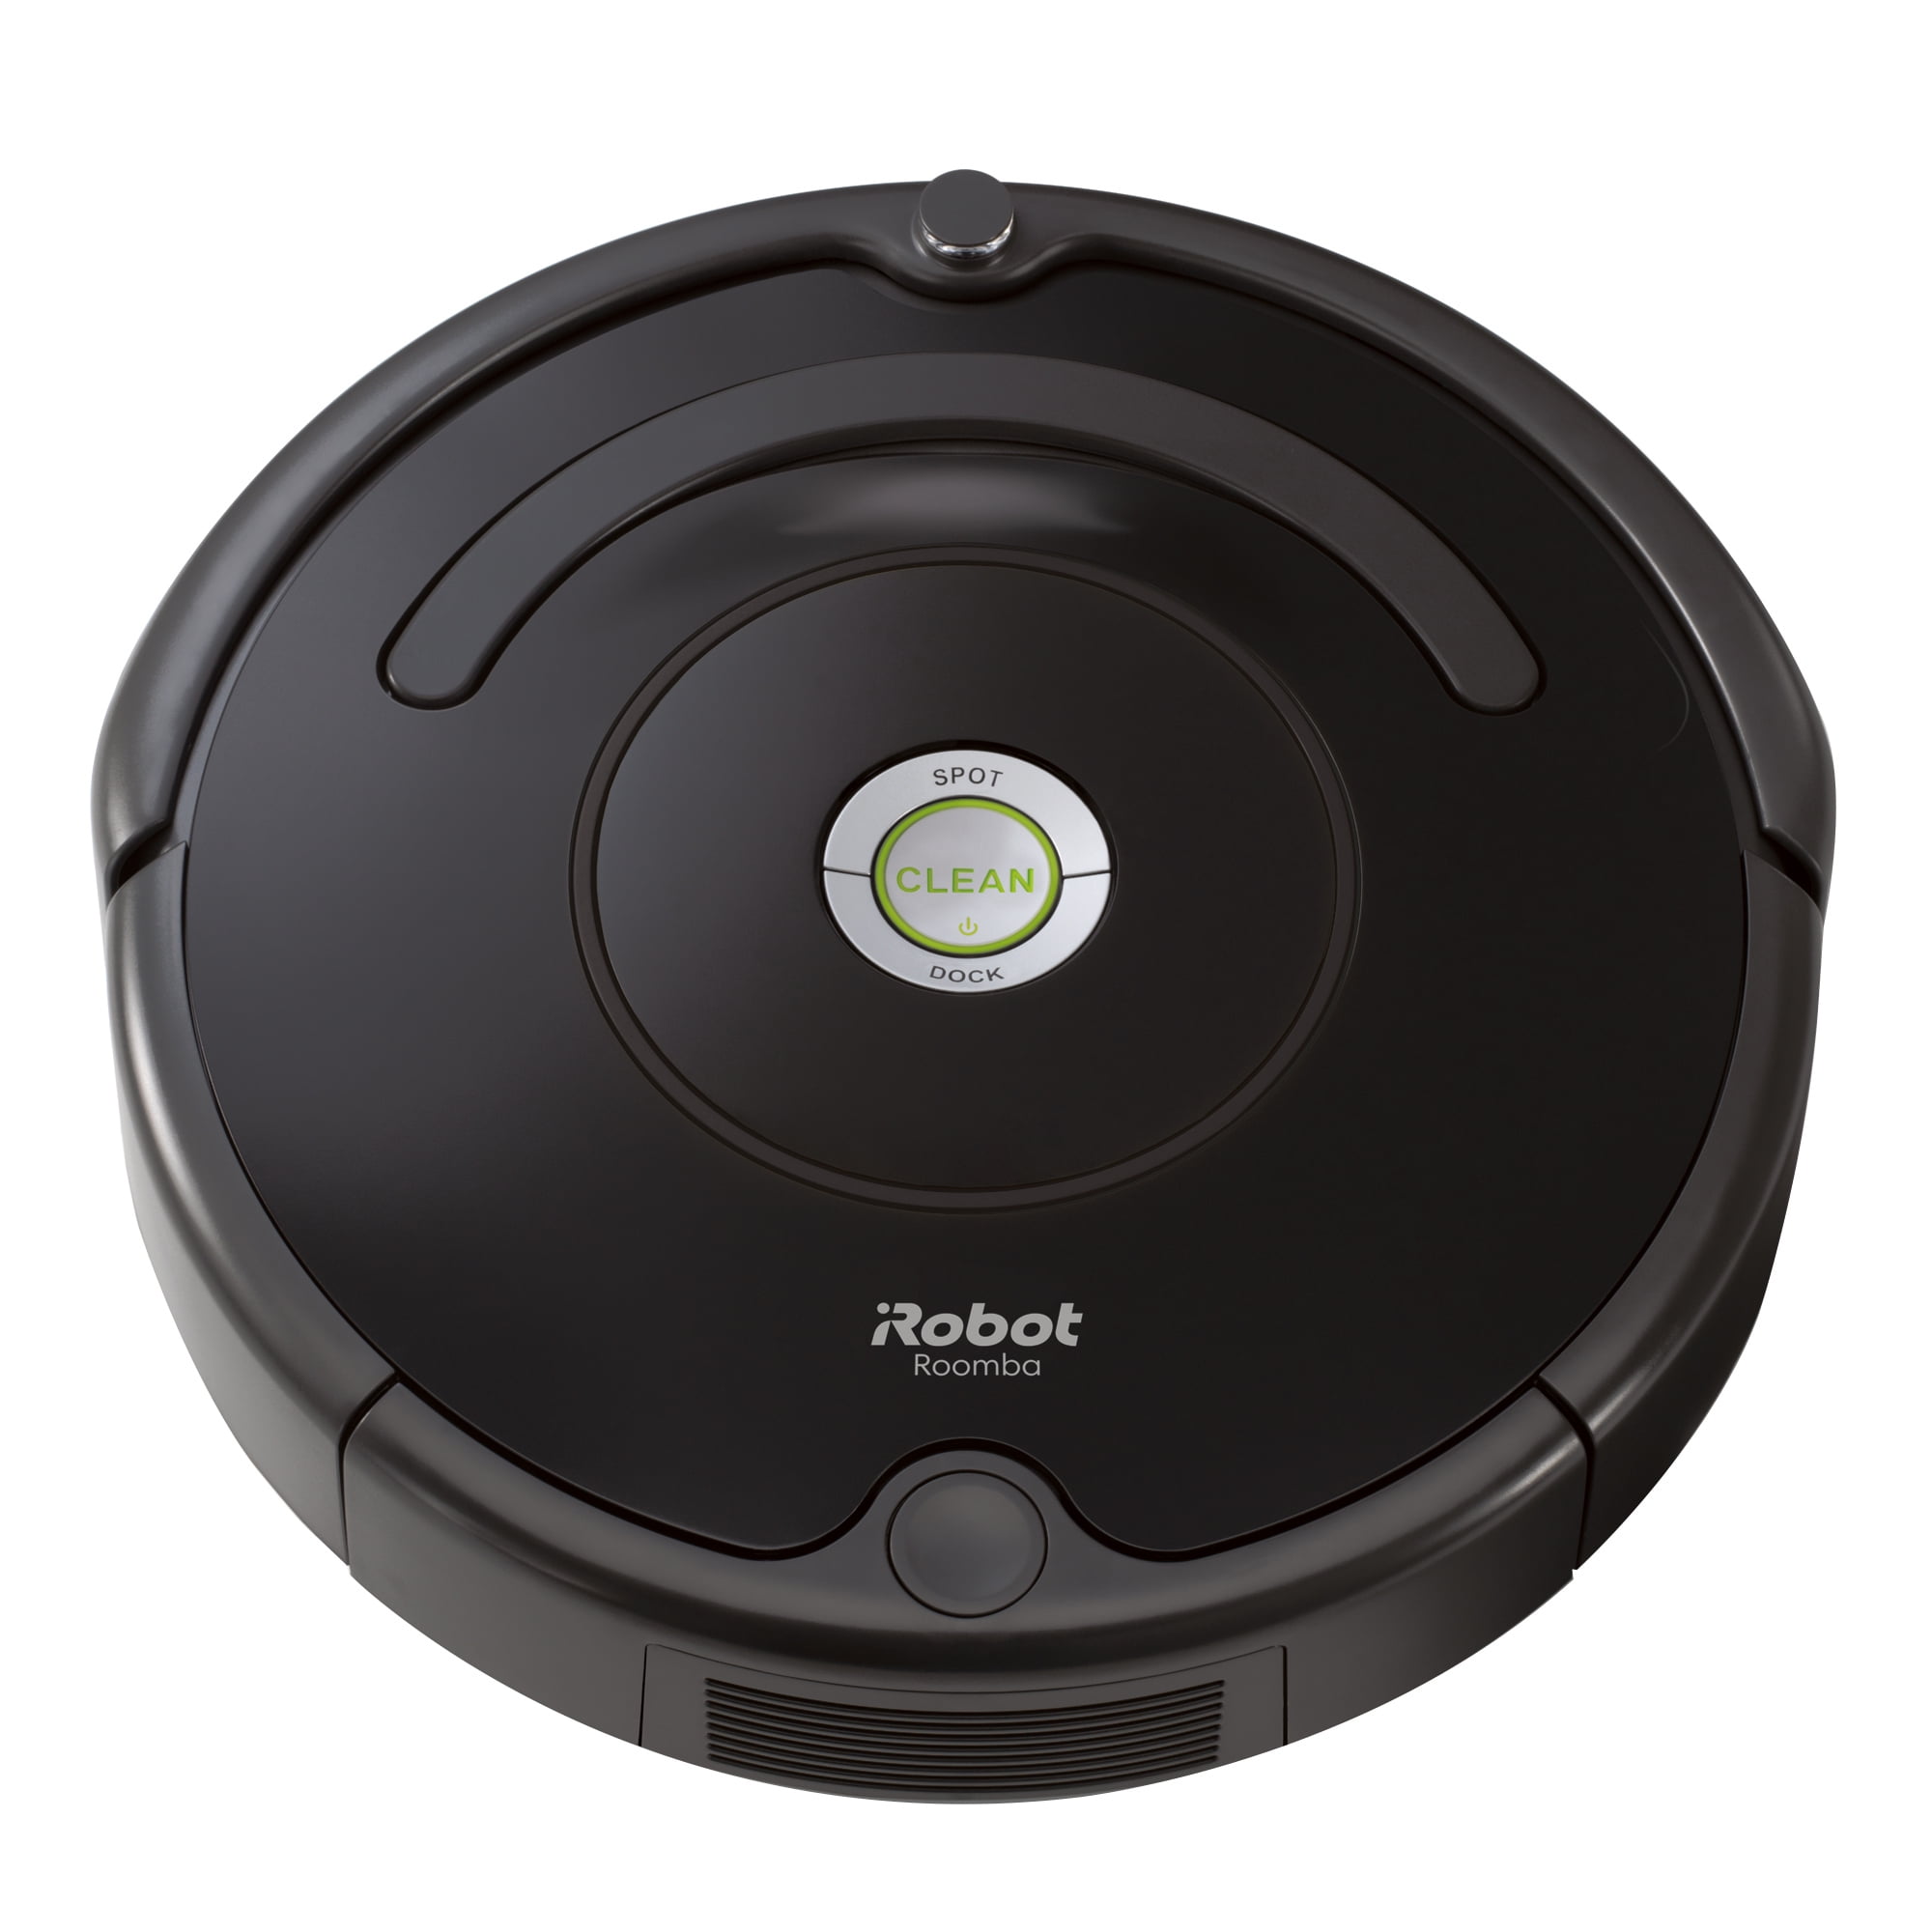 iRobot Roomba 614 Robot Vacuum- Good for Pet Hair, Carpets, Hard Floors,  Self-Charging 